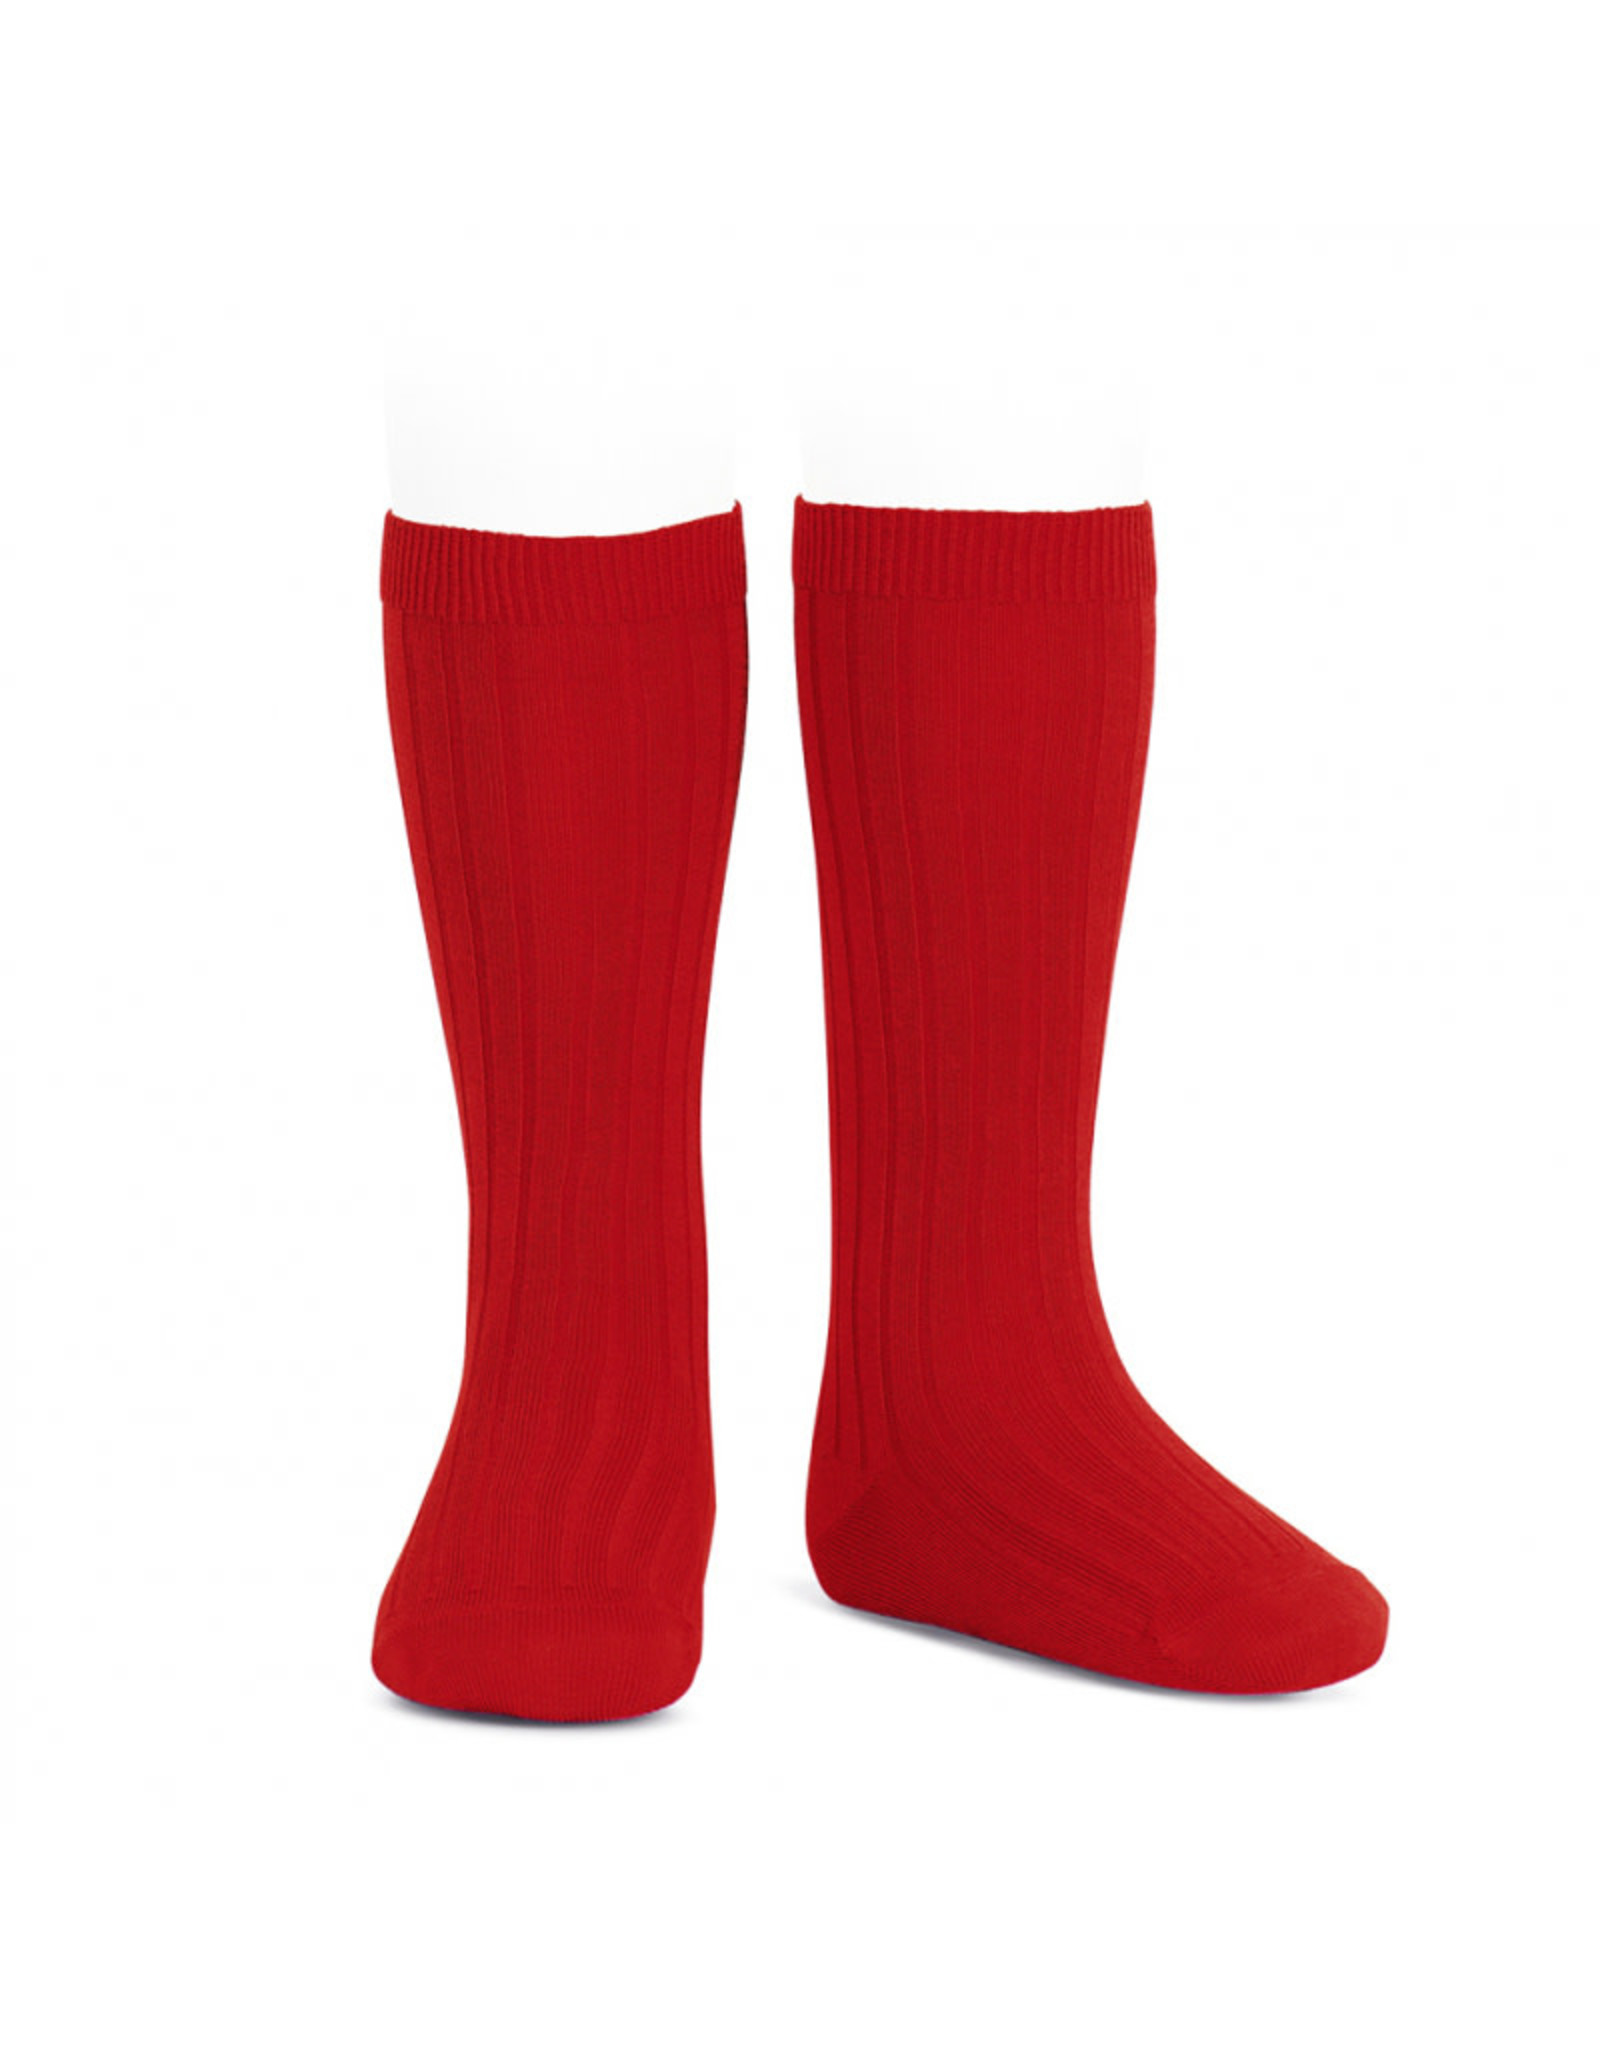 CONDOR Red Ribbed Knee Socks